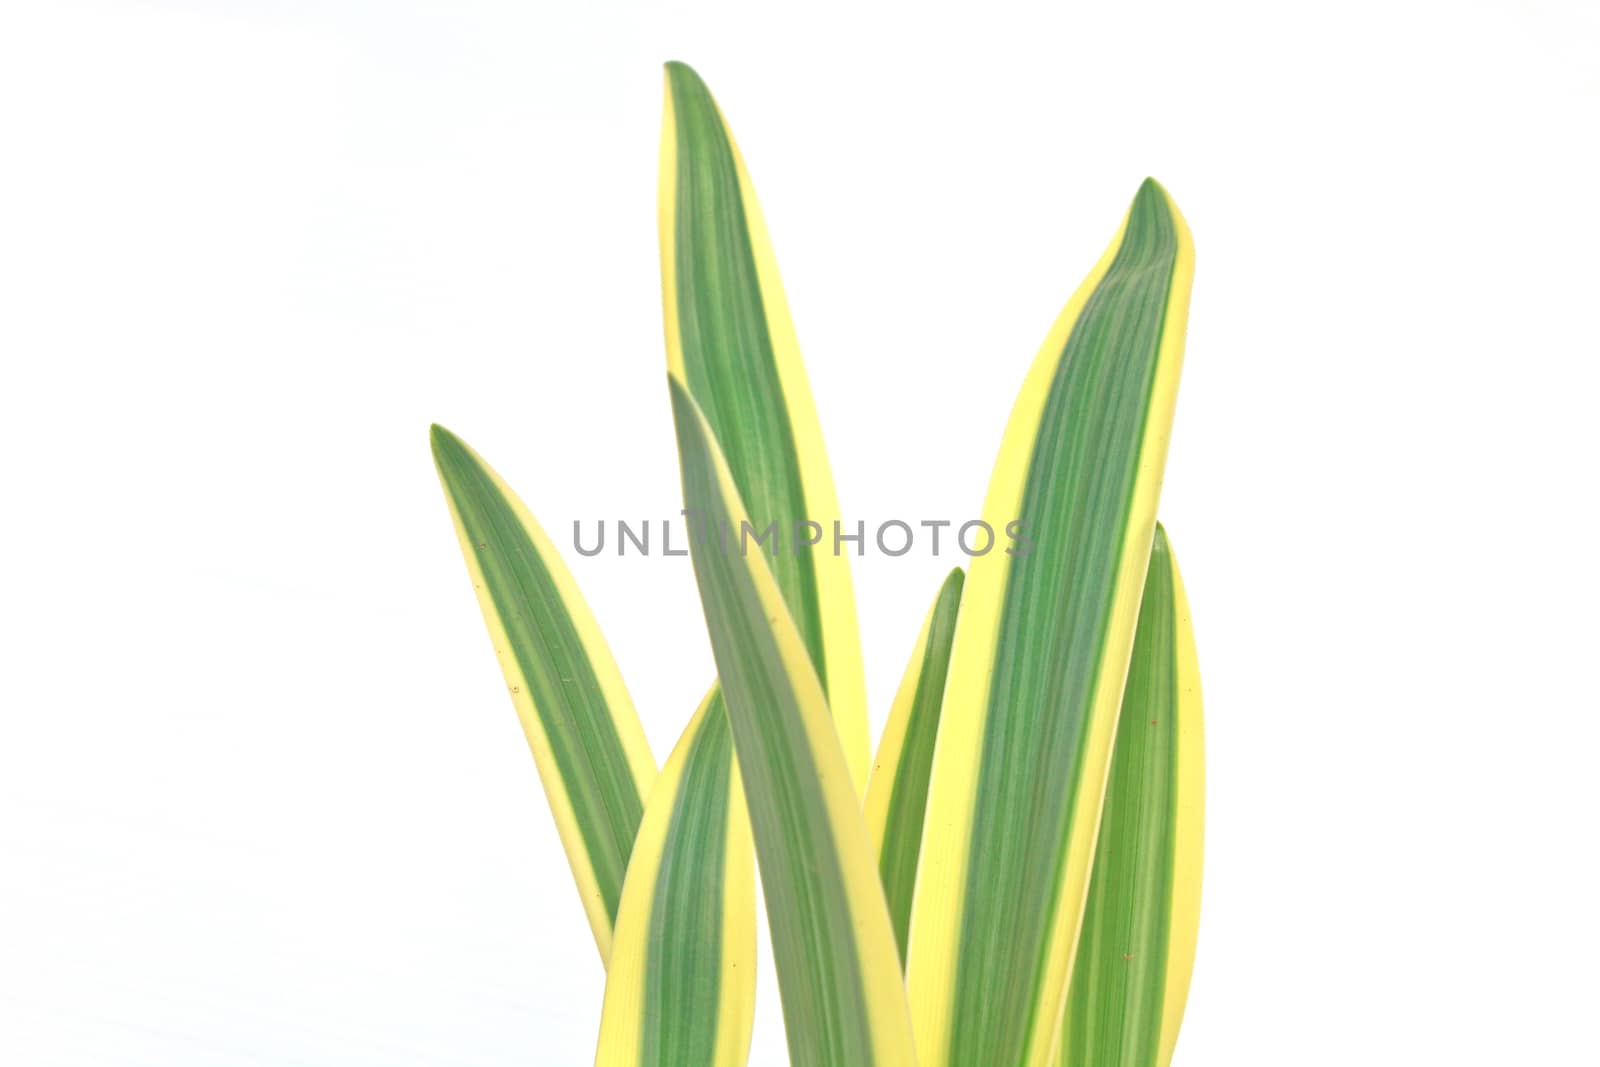 hymenocallis littoralis or Spider Lily leaf on background